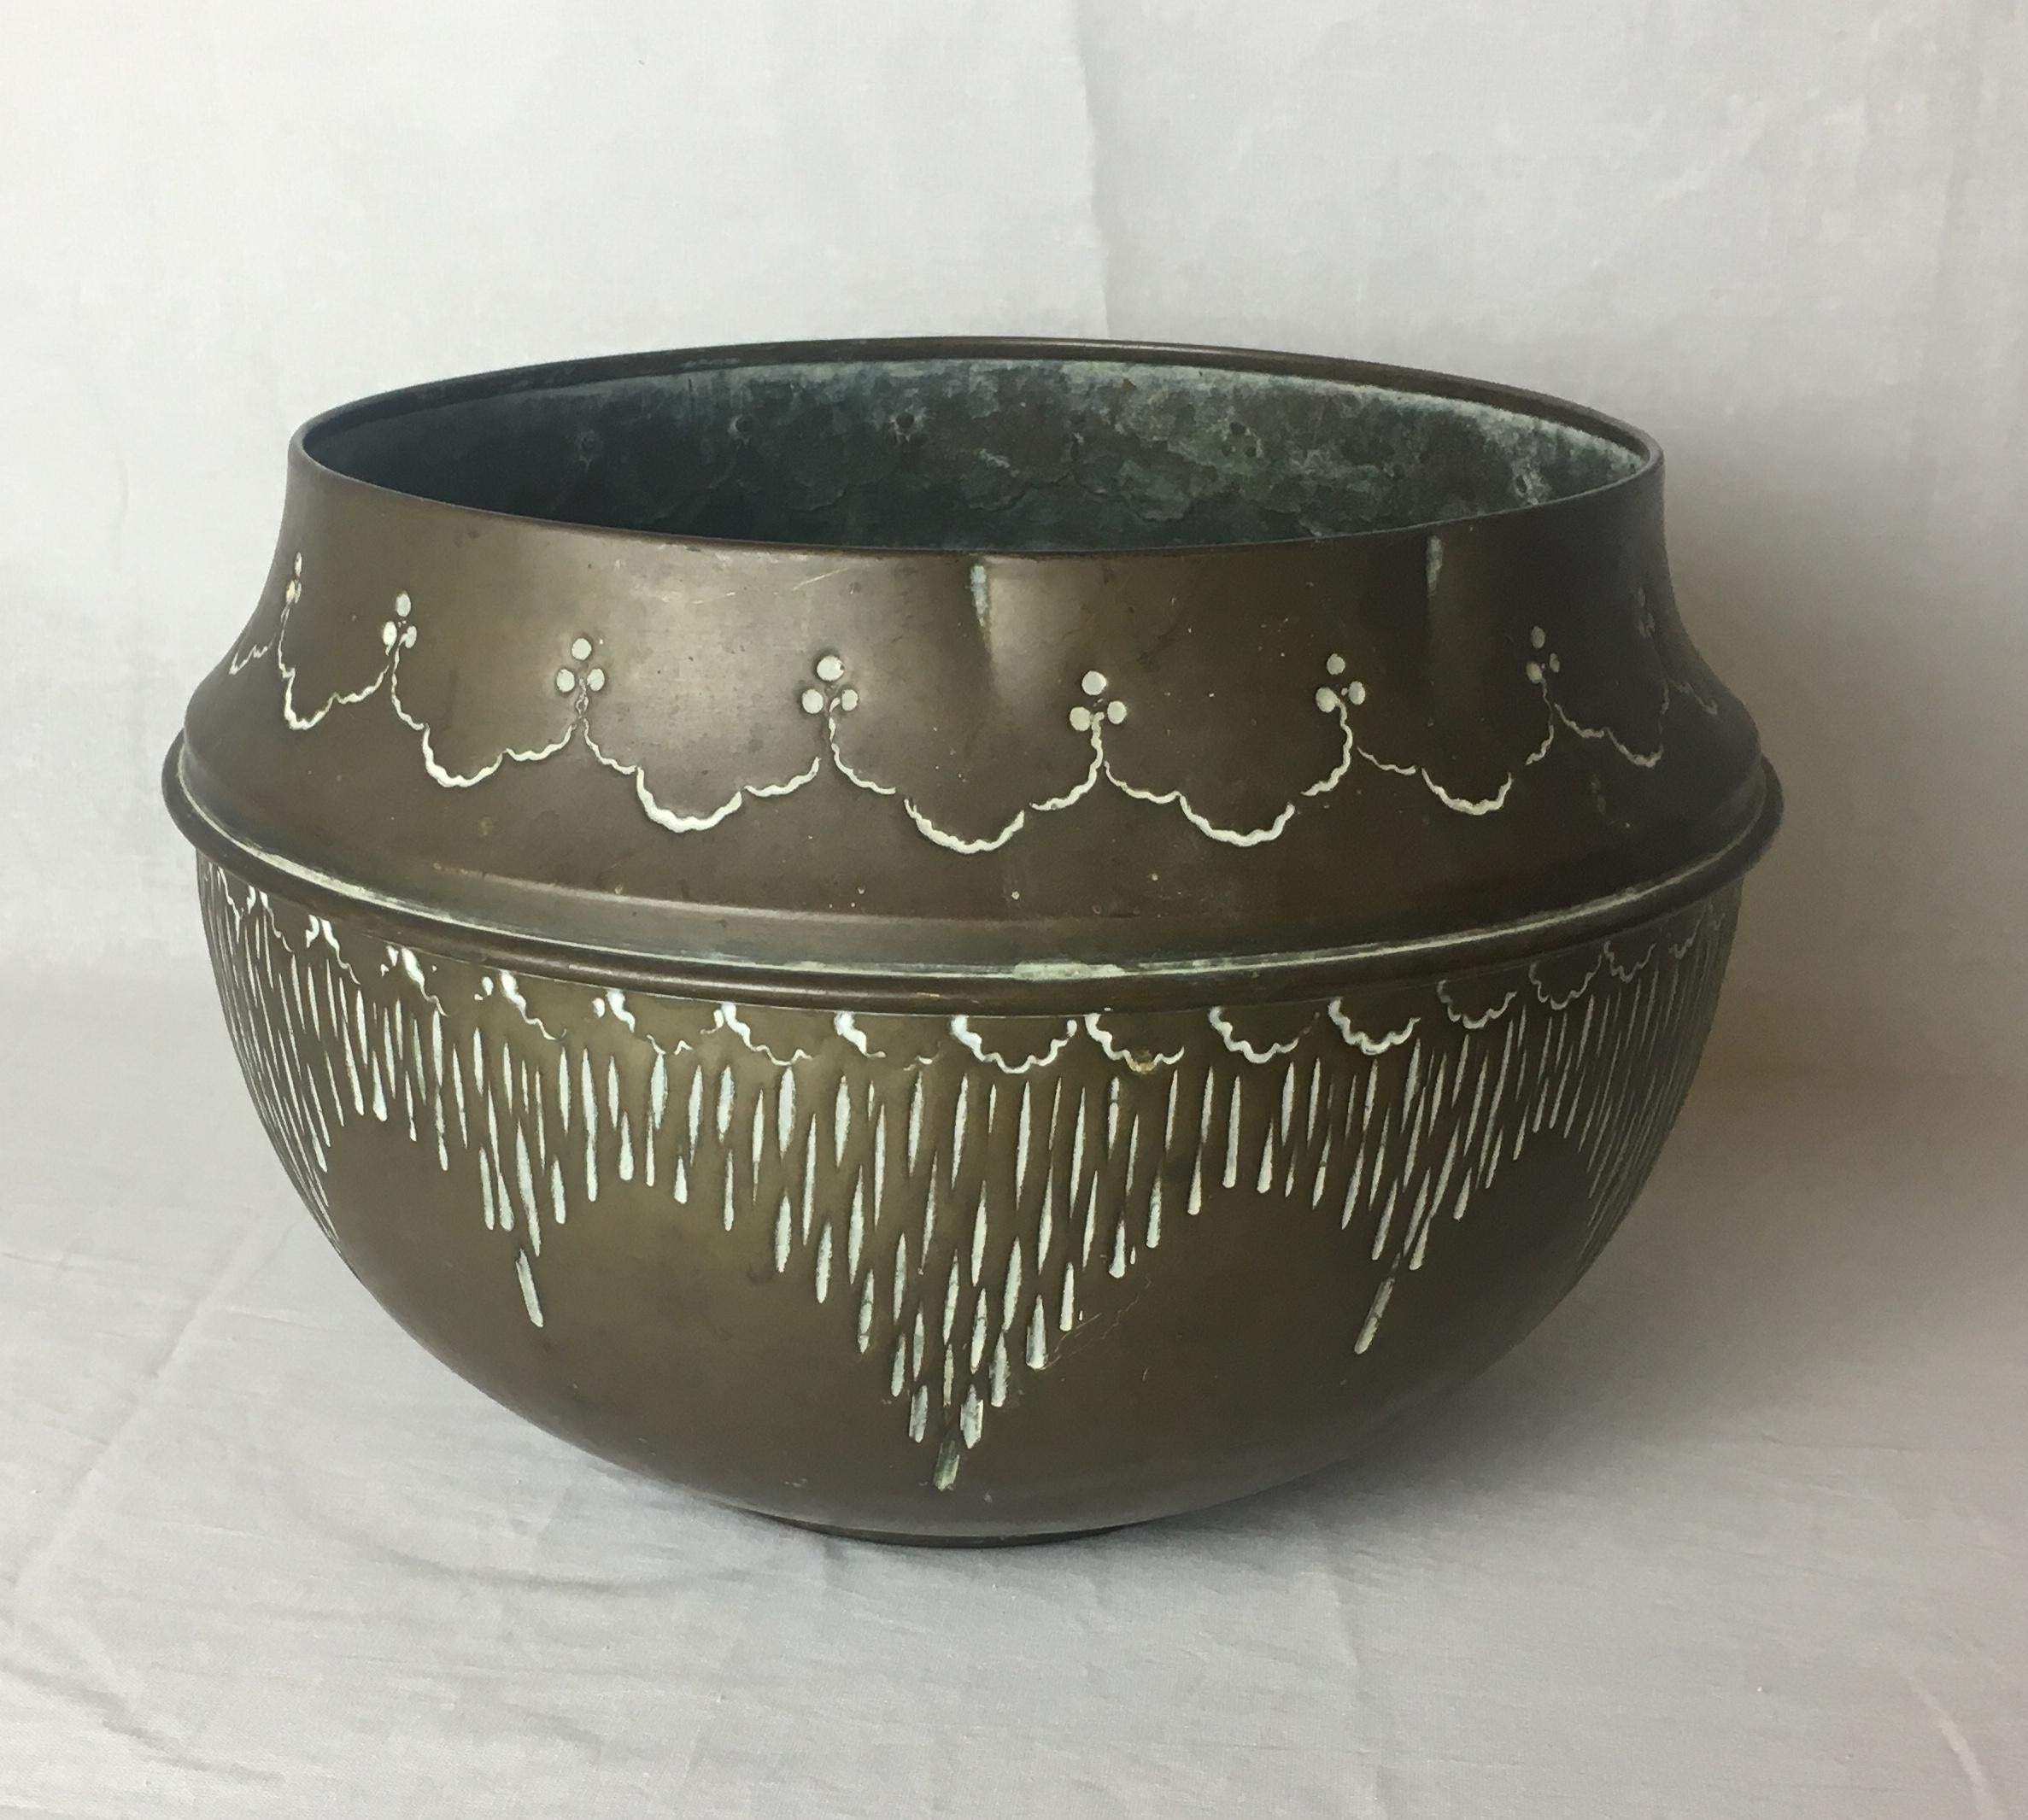 20th Century Art Deco Handcrafted Decorative Copper Pot or Bowl